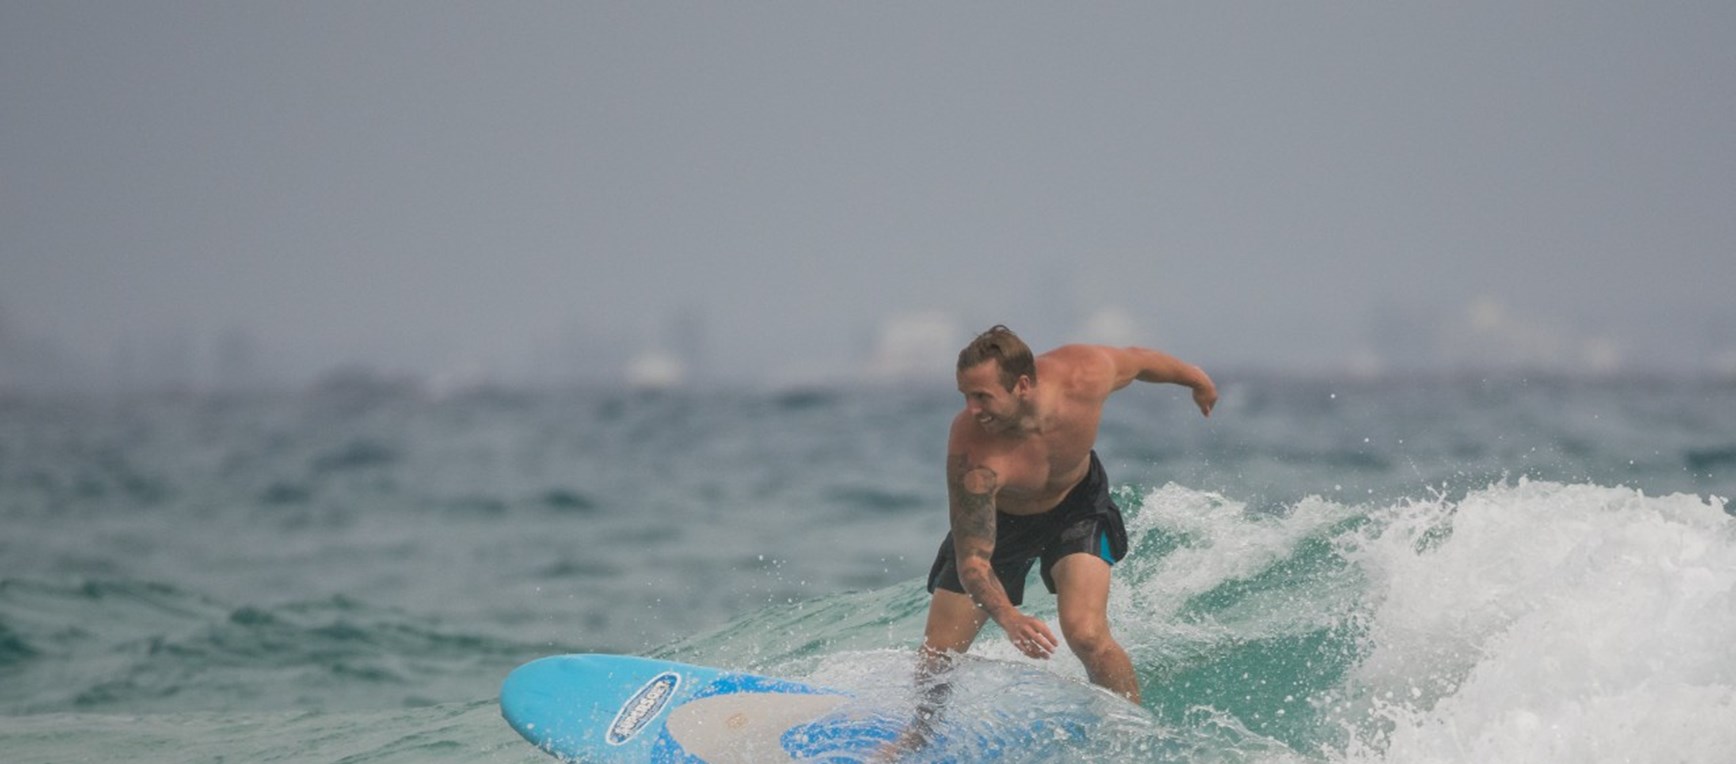 GALLERY: Surfing